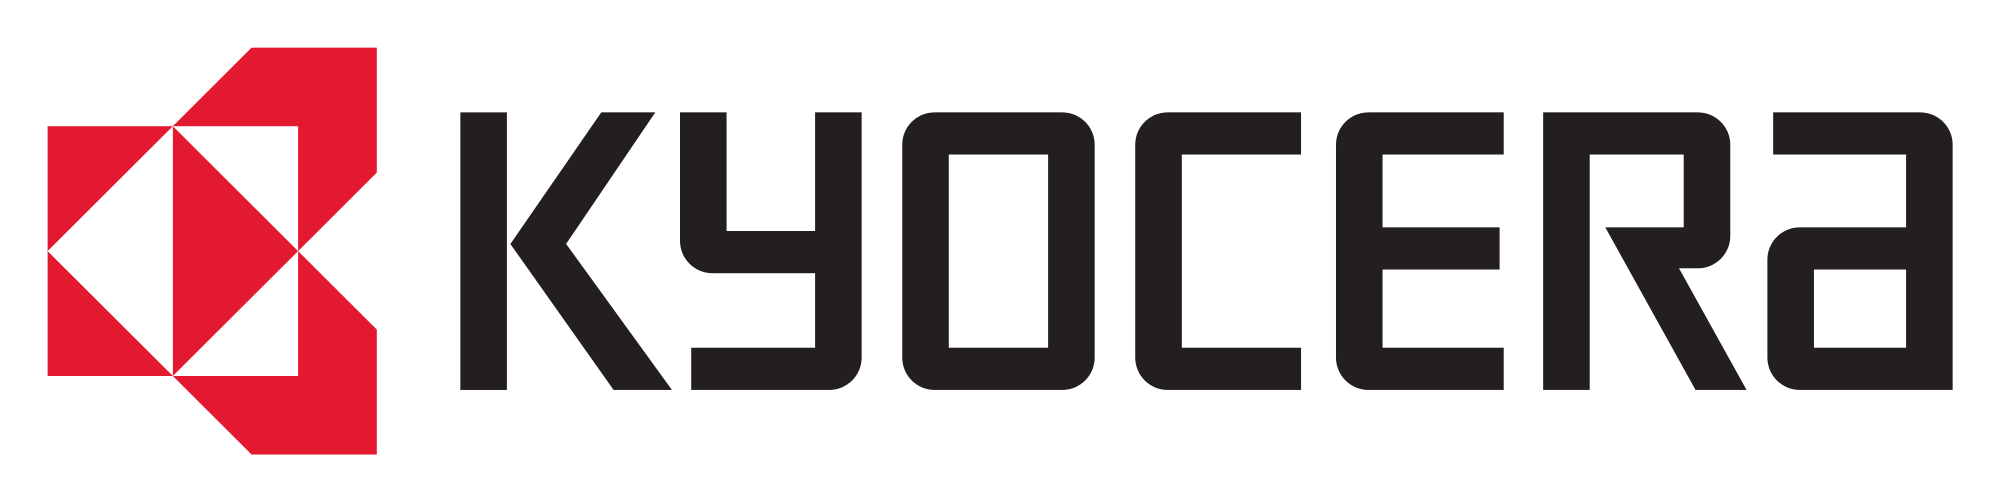 Kyocera Logo PNG - 112398